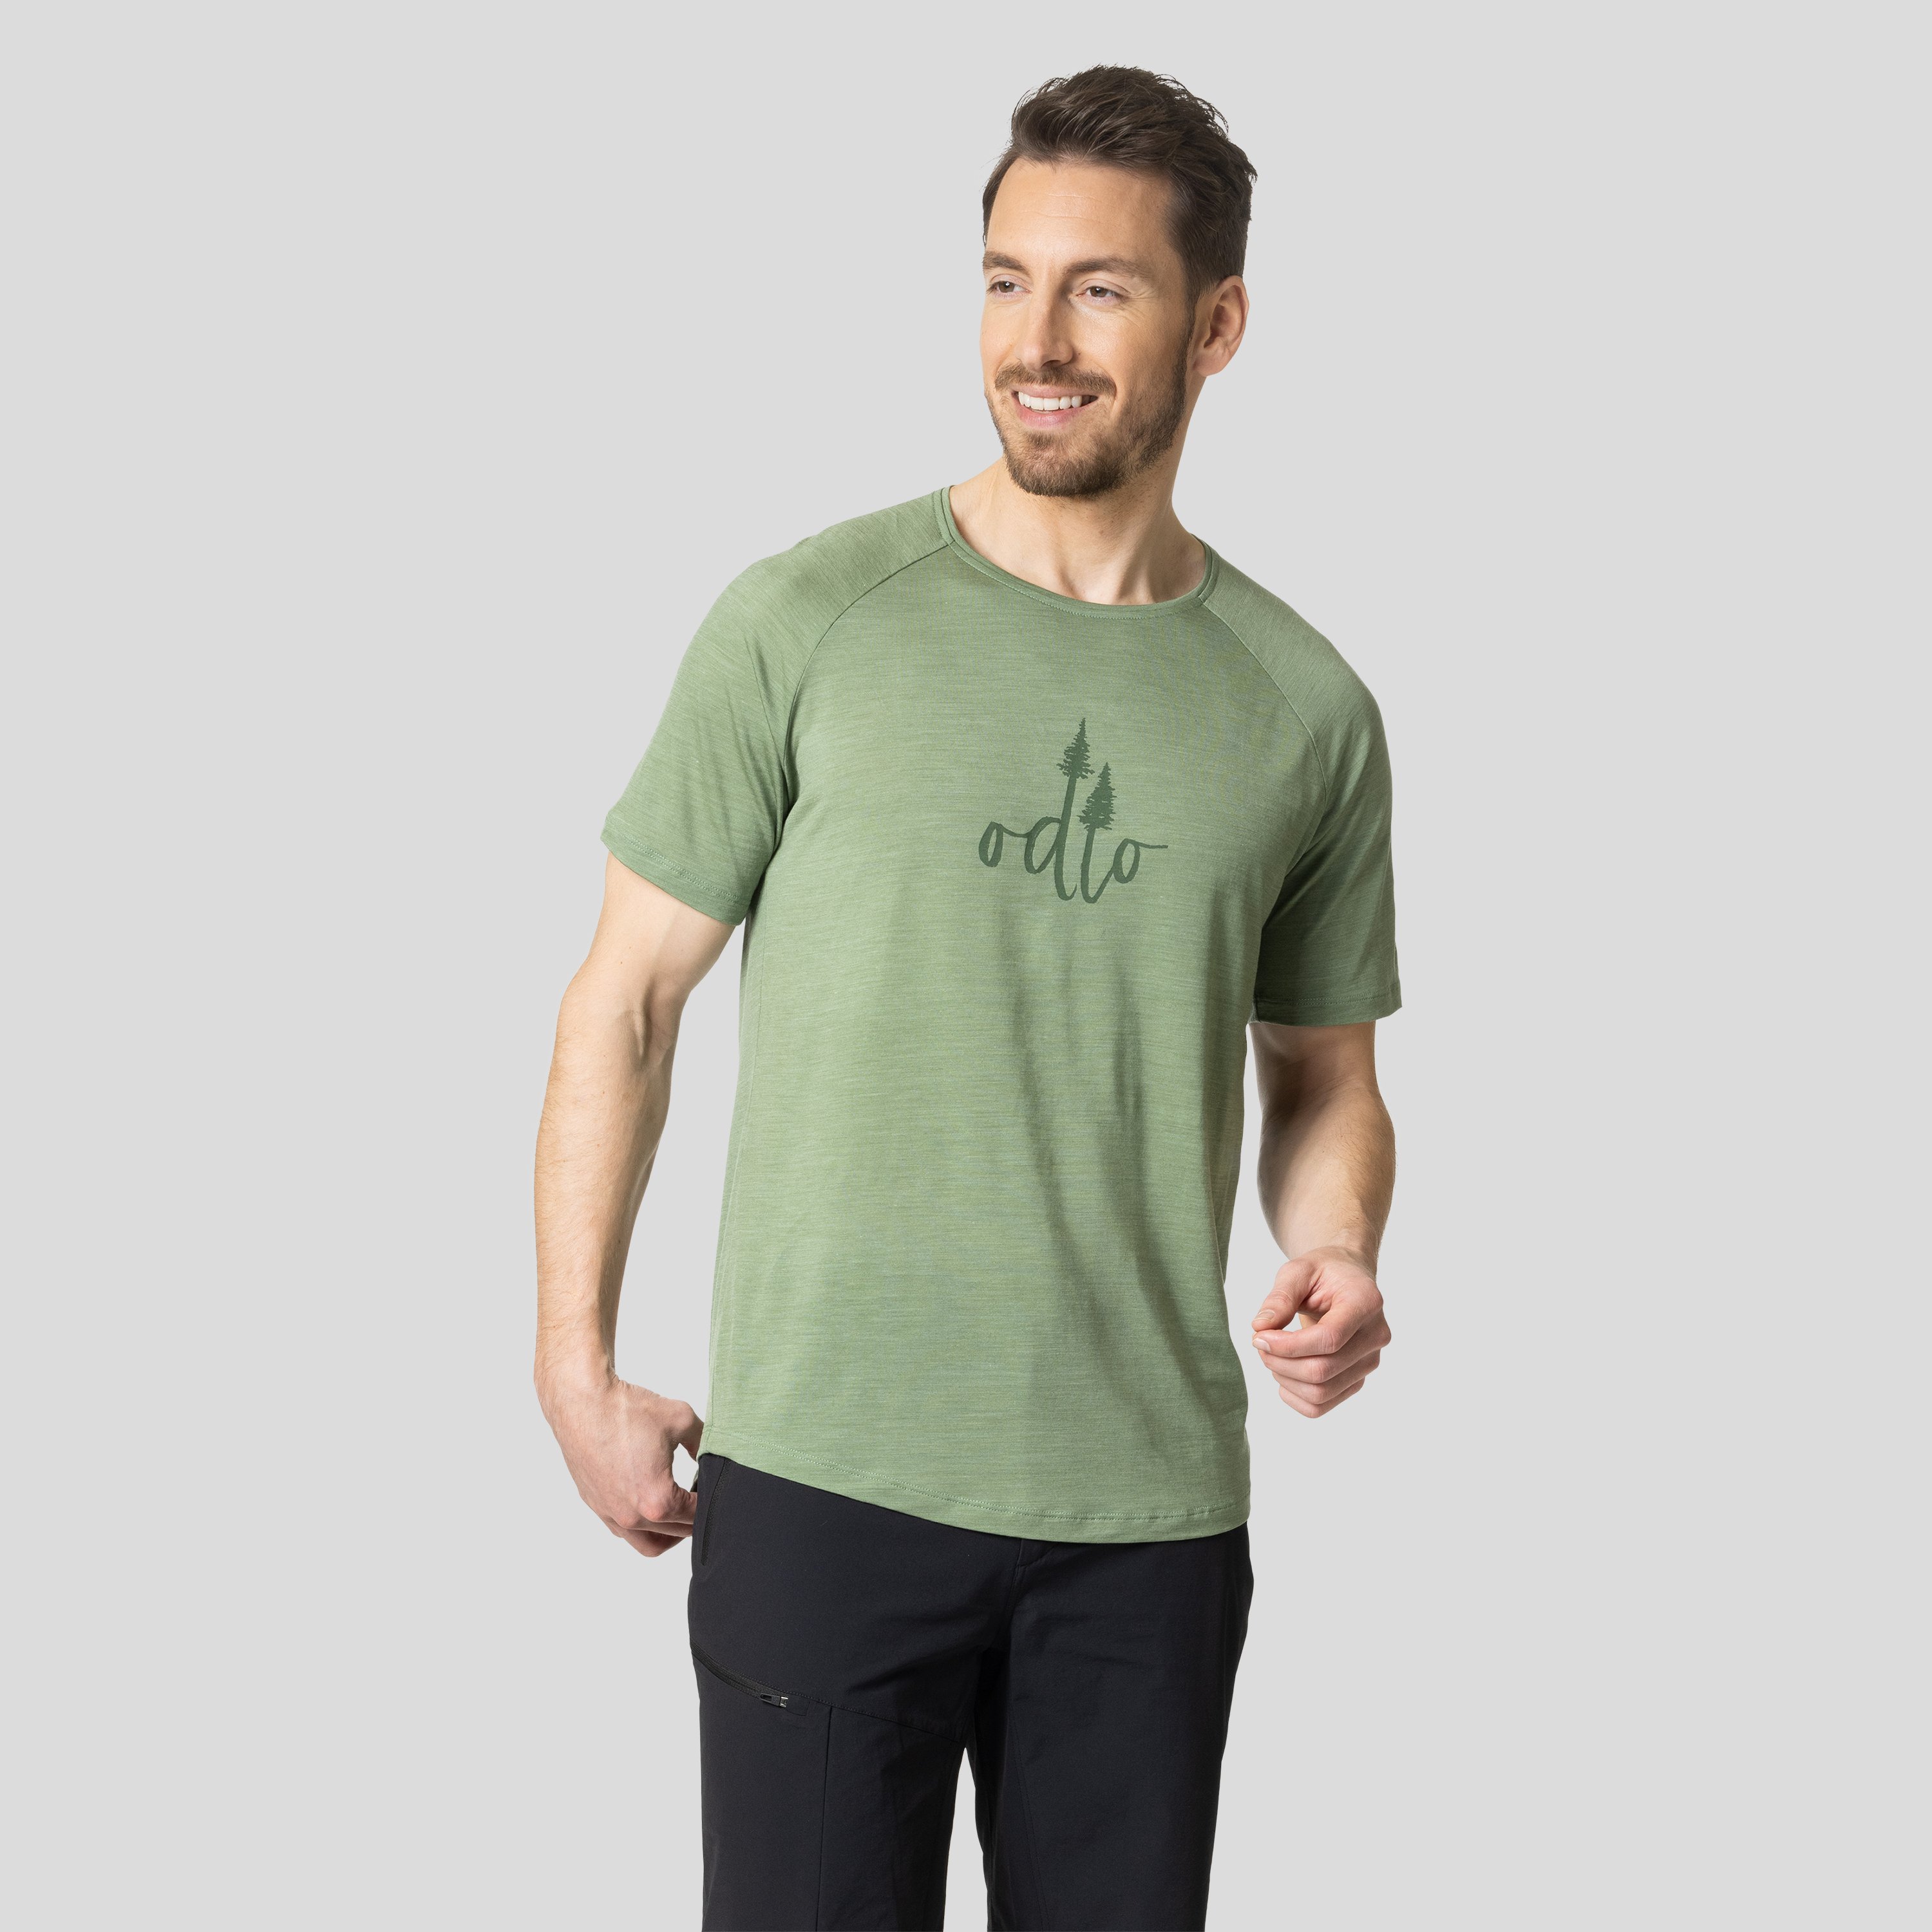 ODLO Ascent Performance Wool 130 T-Shirt mit Baumprint für Herren, S, grün